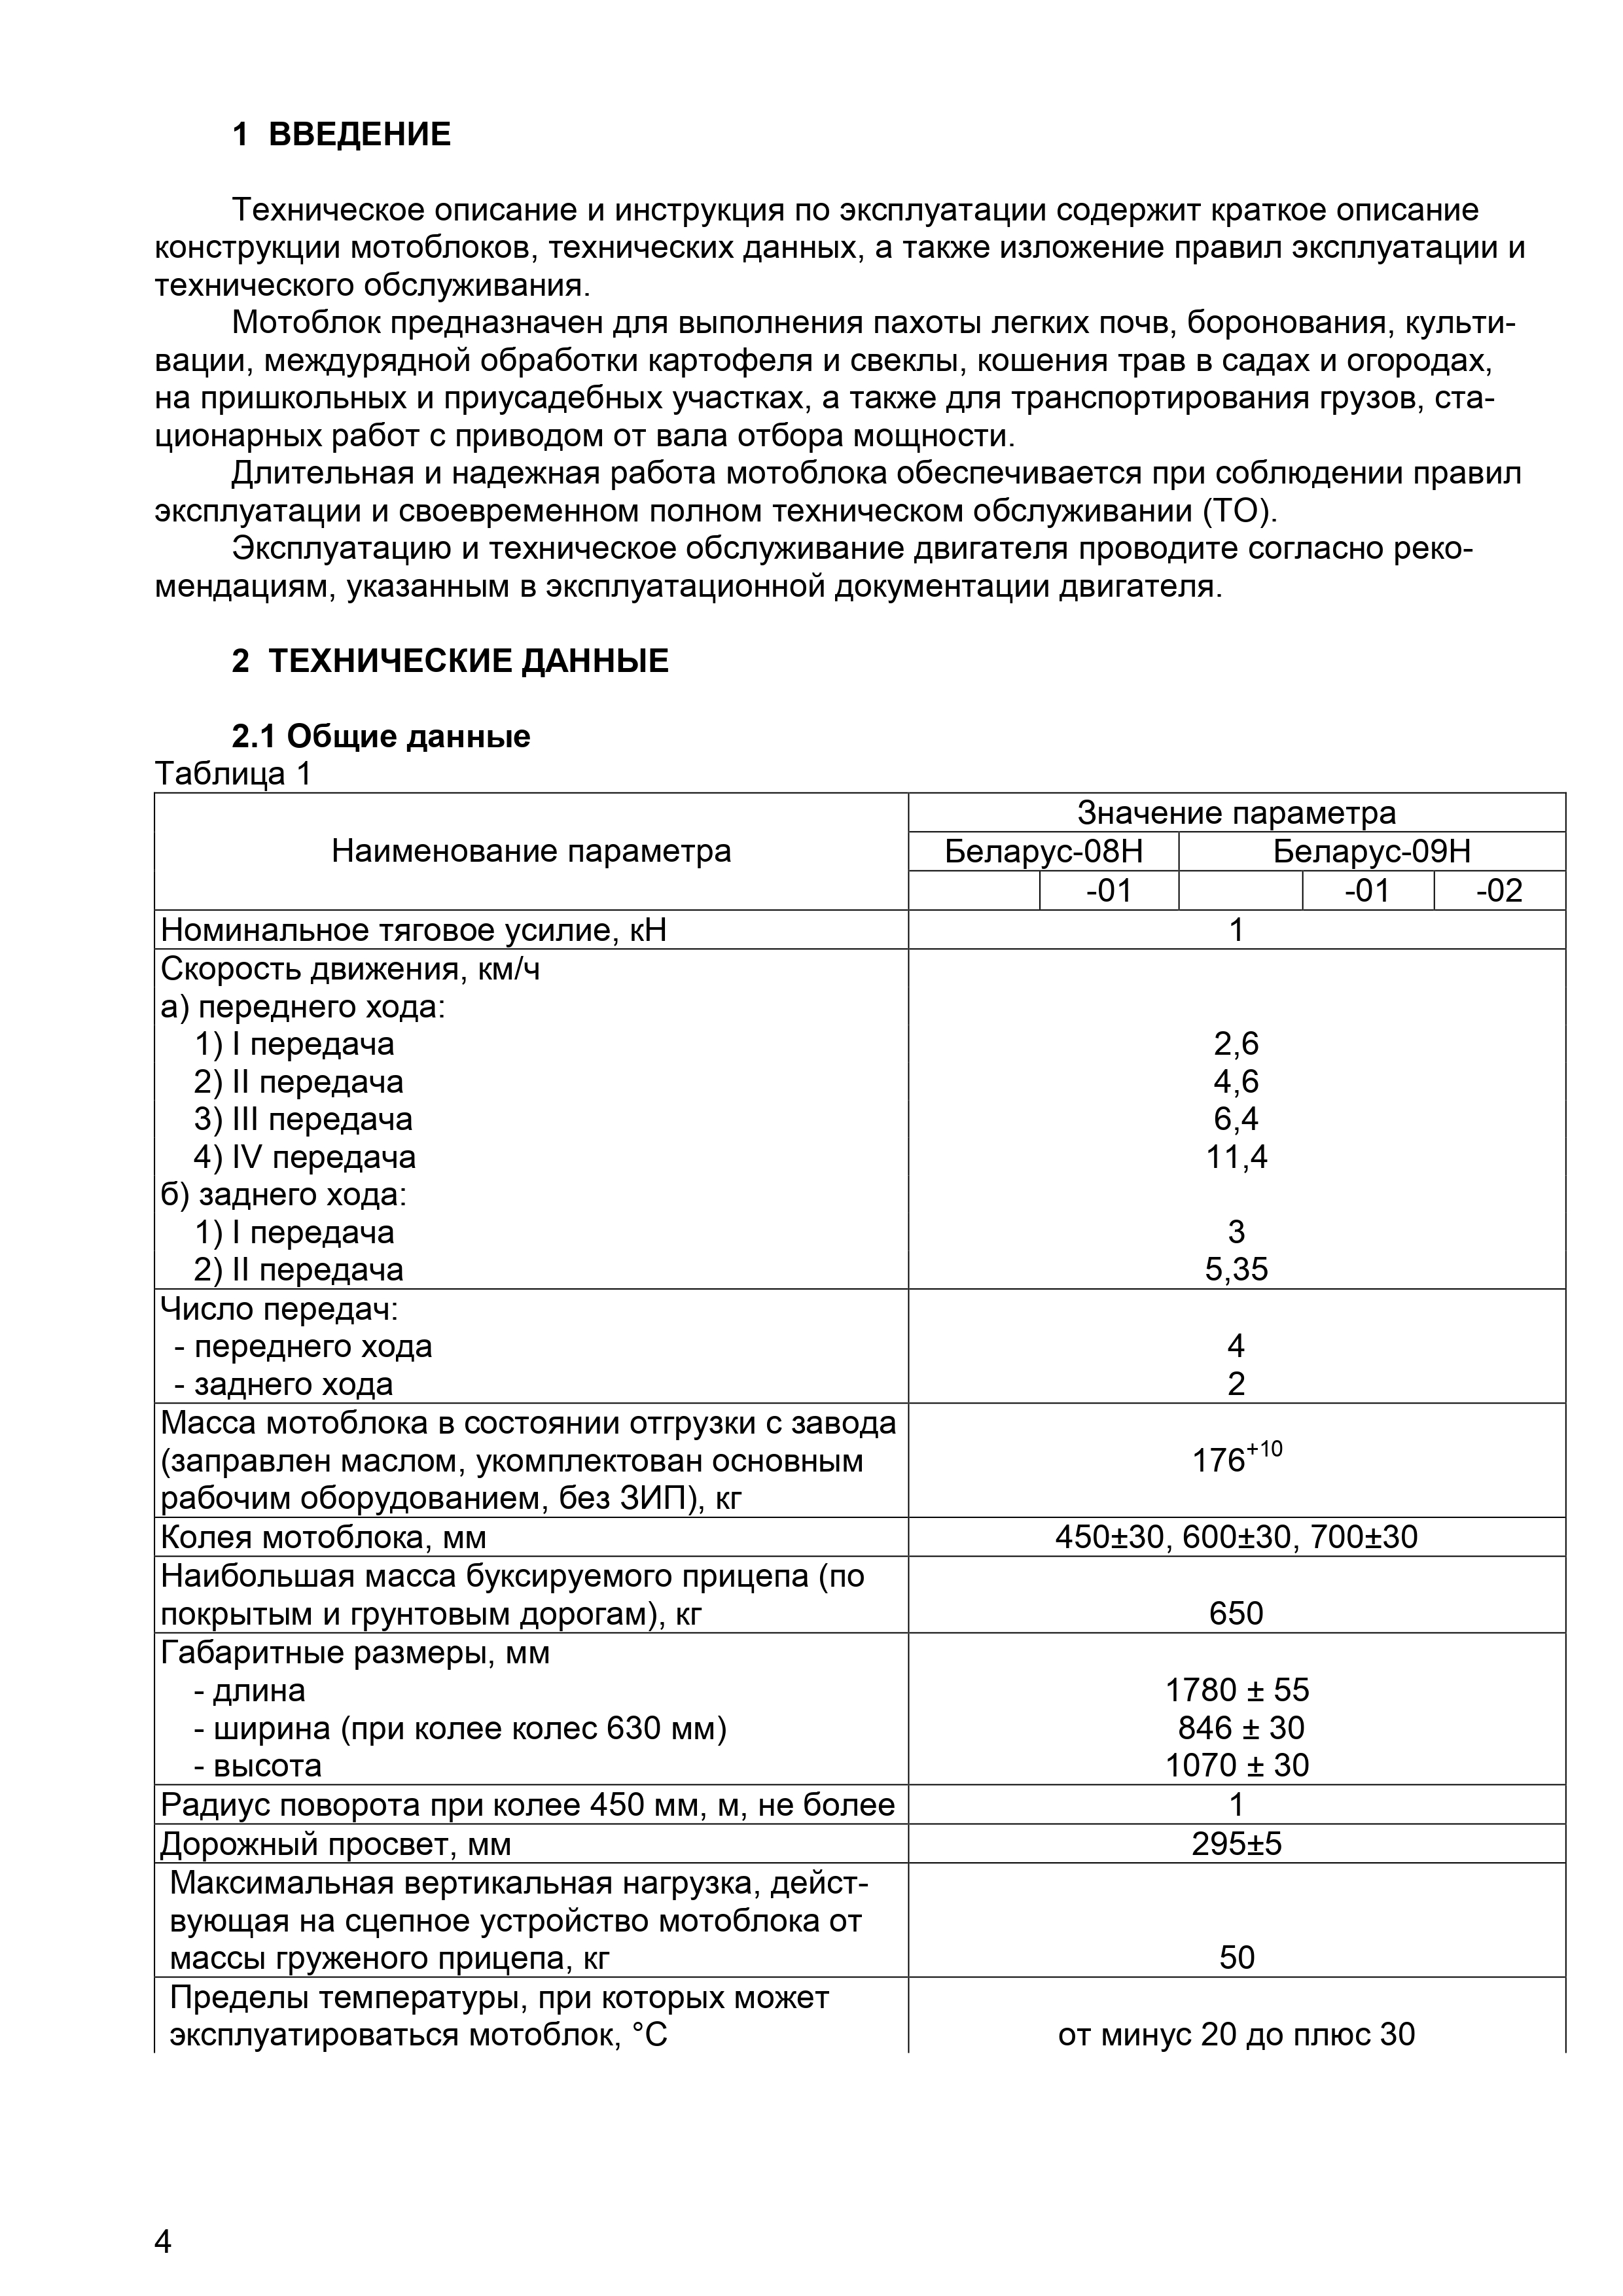 belarus_09h_manual i catalog (1)_page-0004